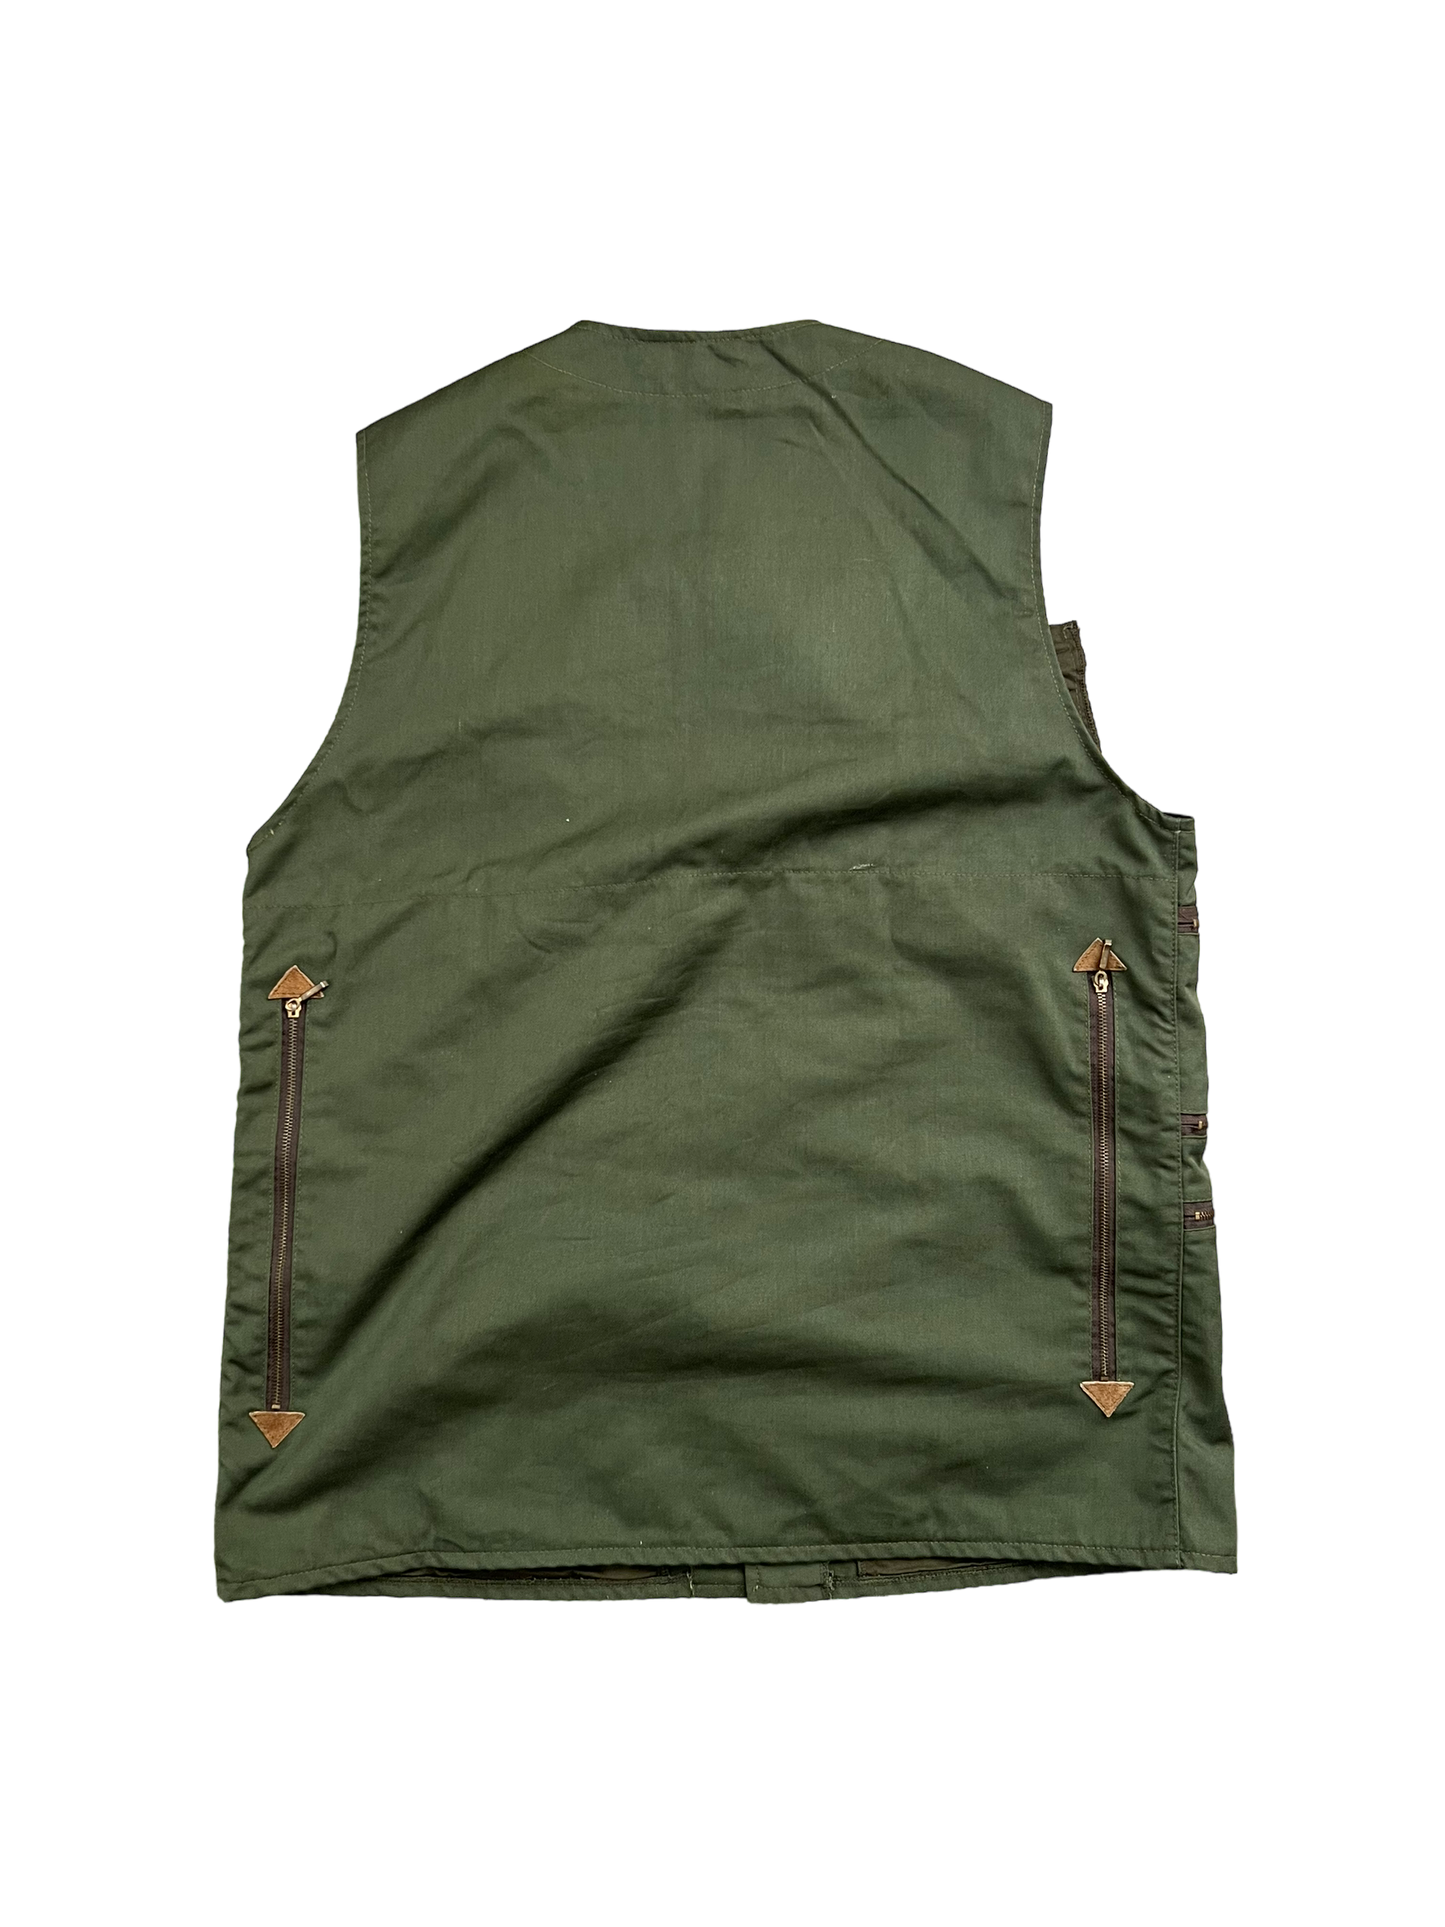 80’s Italian hunting vest